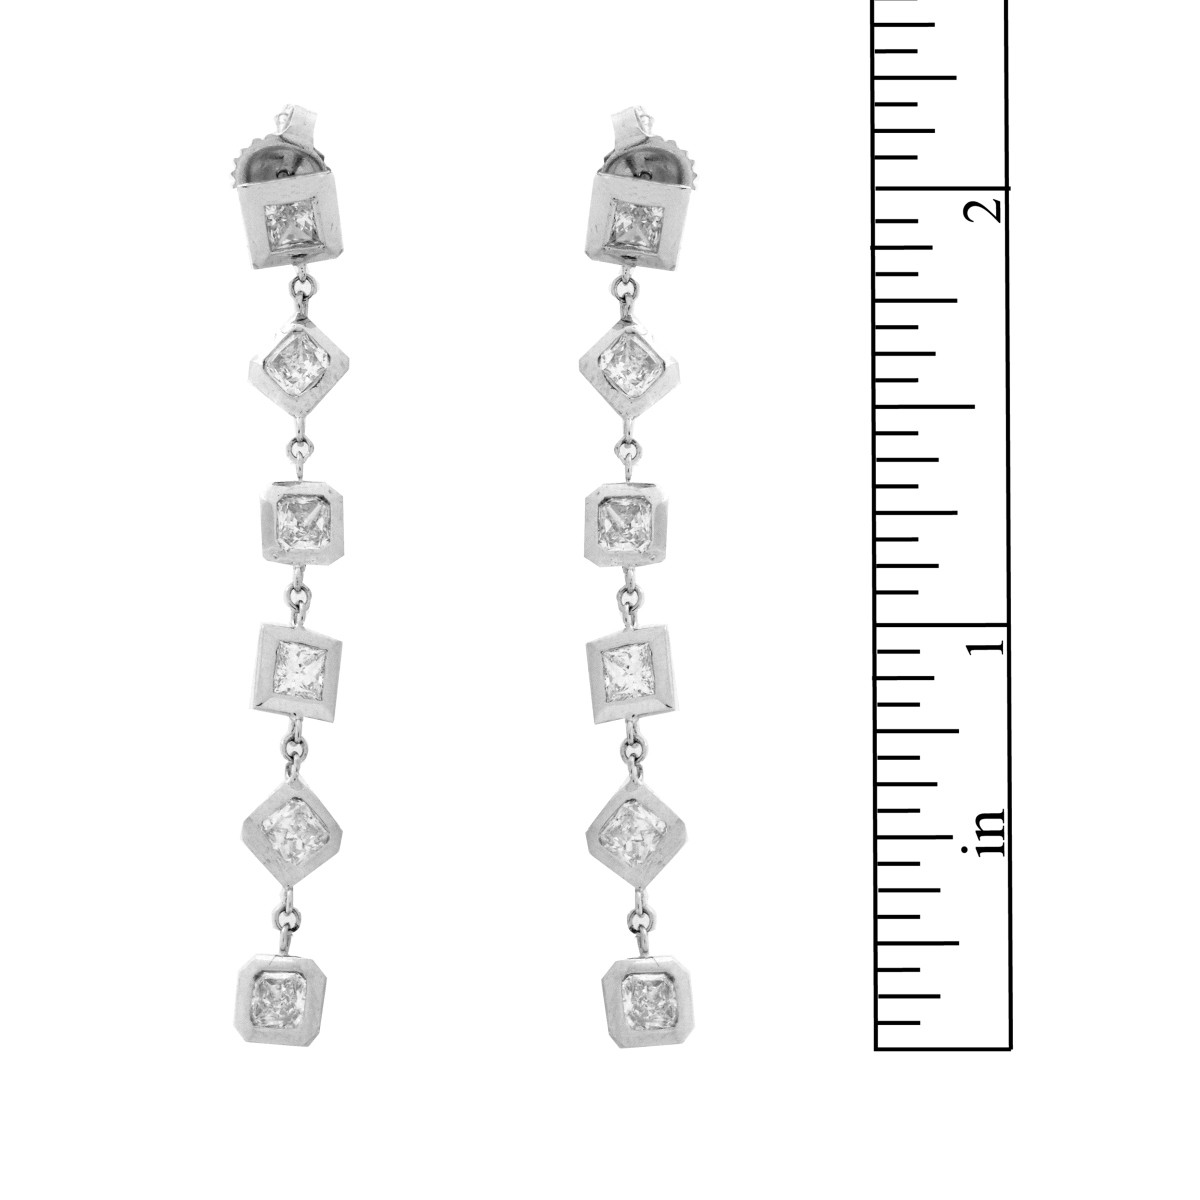 4.42 Carat Diamond and 18K Earrings